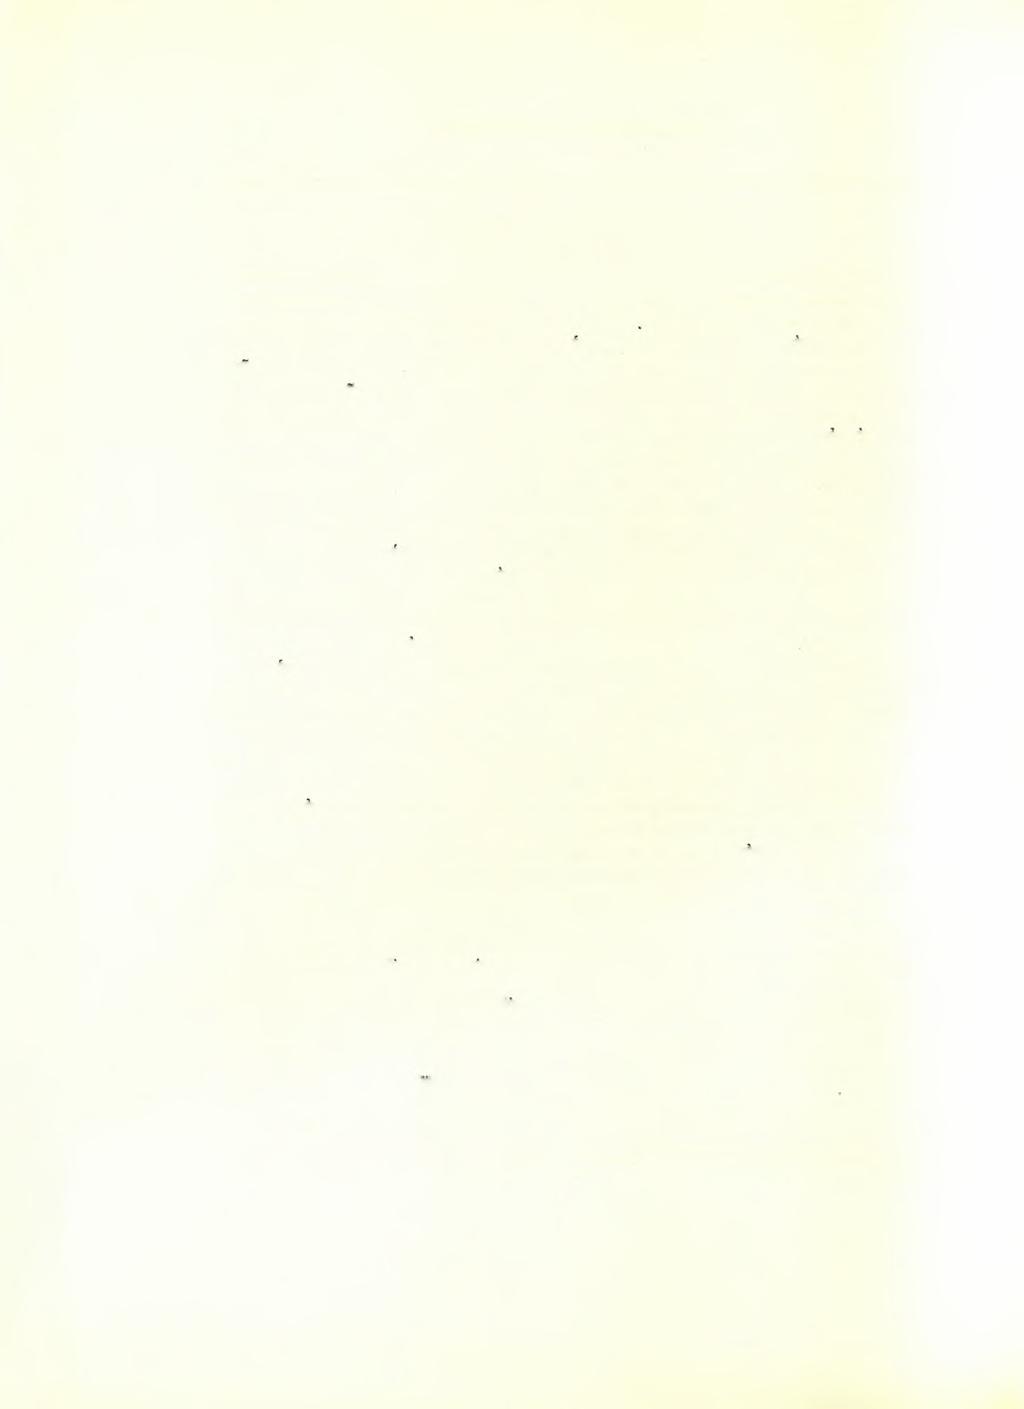 54 X. ΠΑΠΑΔΟΠΟΥΛΟΥ- ΚΑΝΕΛΛΟΠΟΥΛΟΥ Άριθ. 26. 1961 - ΝΑΚ 155 (Πίν. 33β). Πηλός καστανός. Συνεκολλήθη έκ τεσσάρων τεμαχίων. Τμήμα πώματος Διαστ.